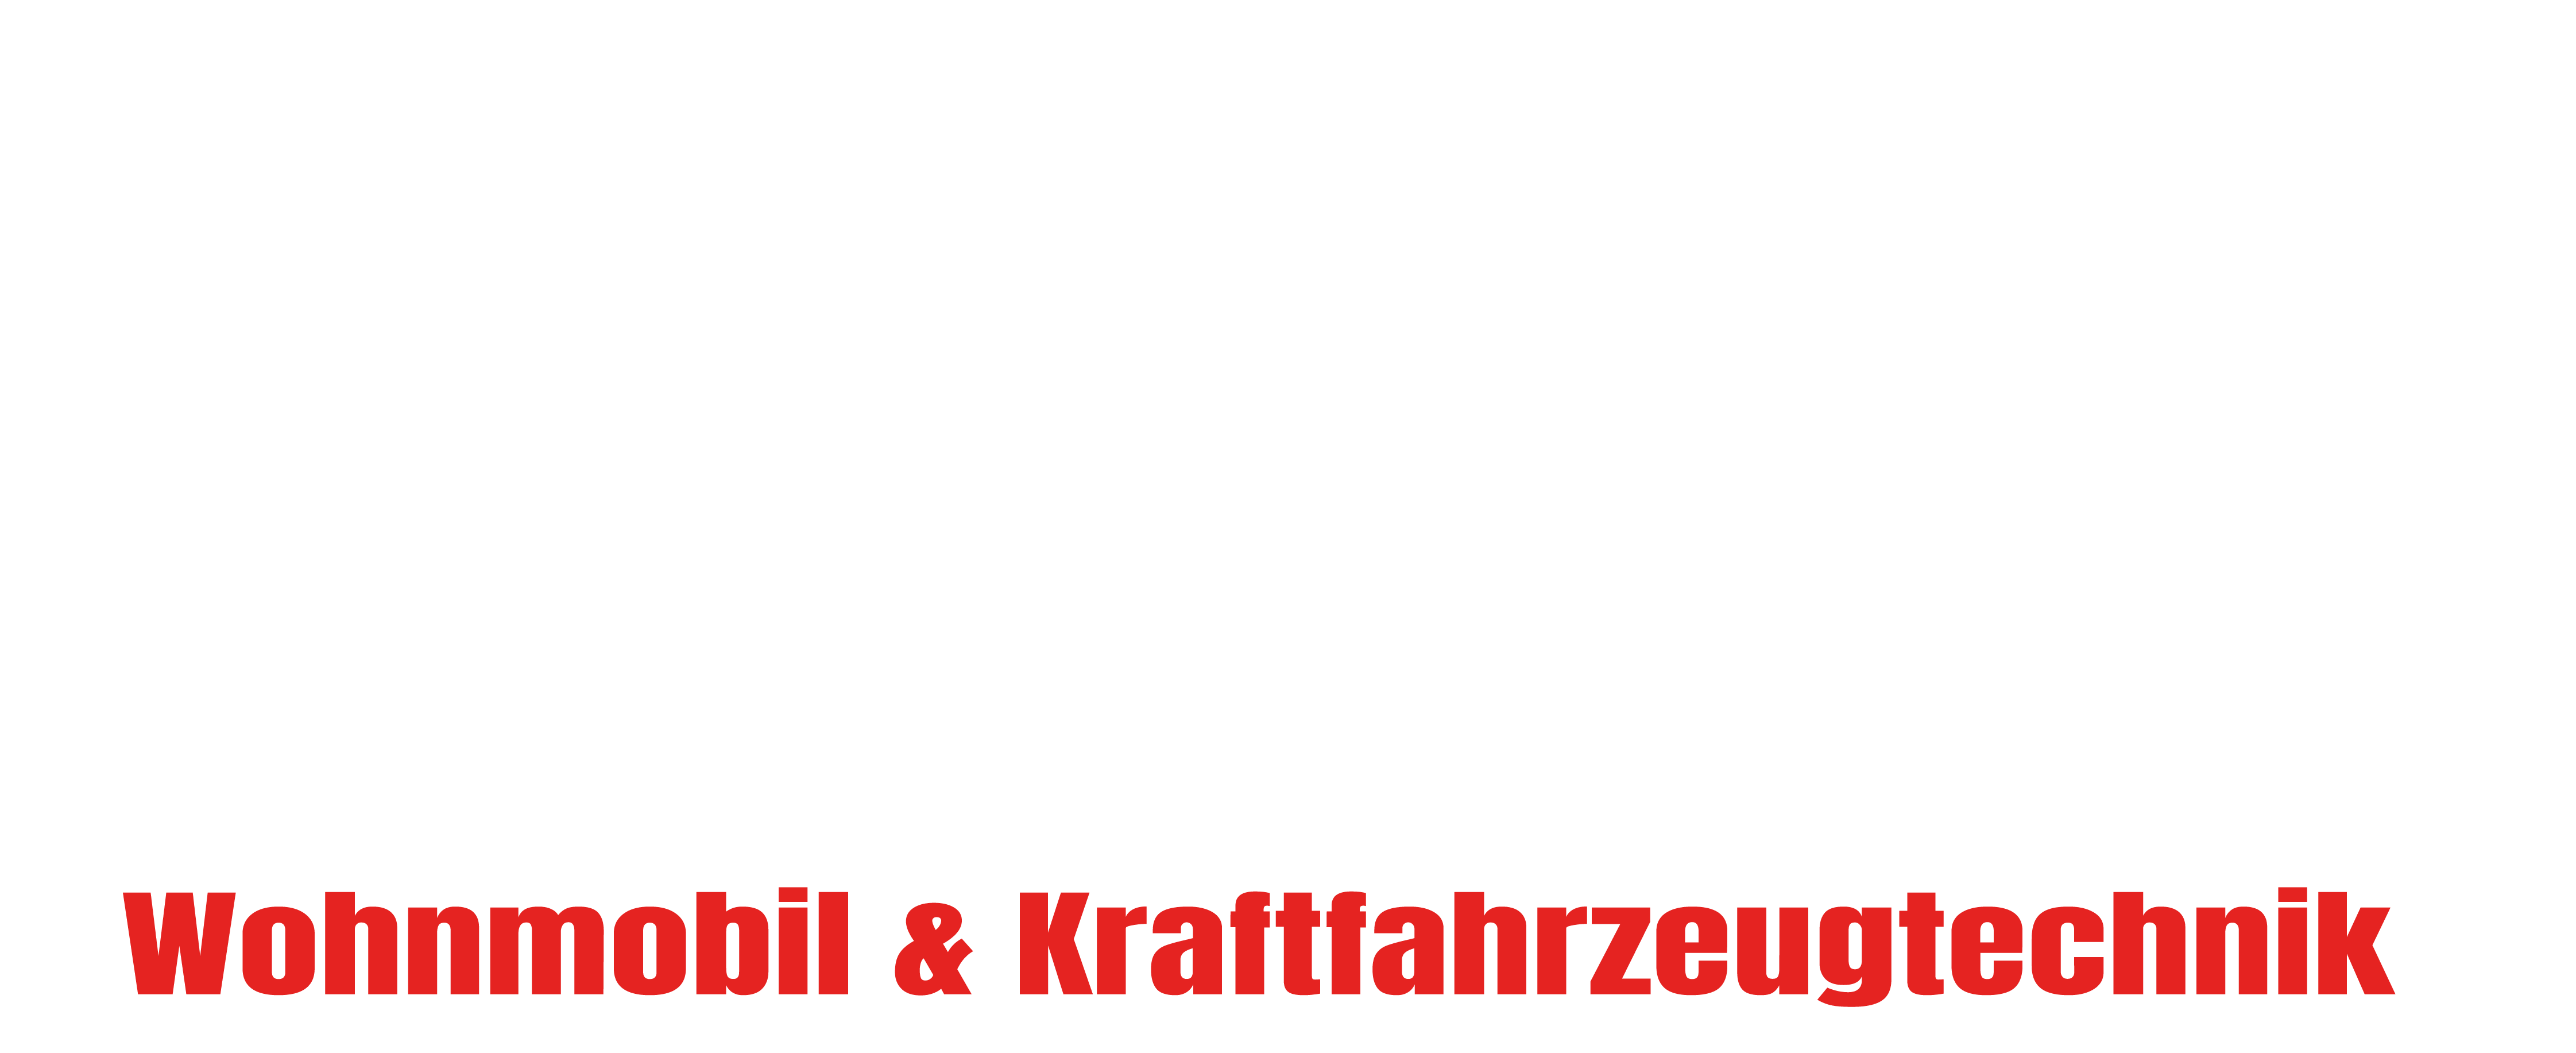 Wohnmobil & Kraftfahrzeugtechnik